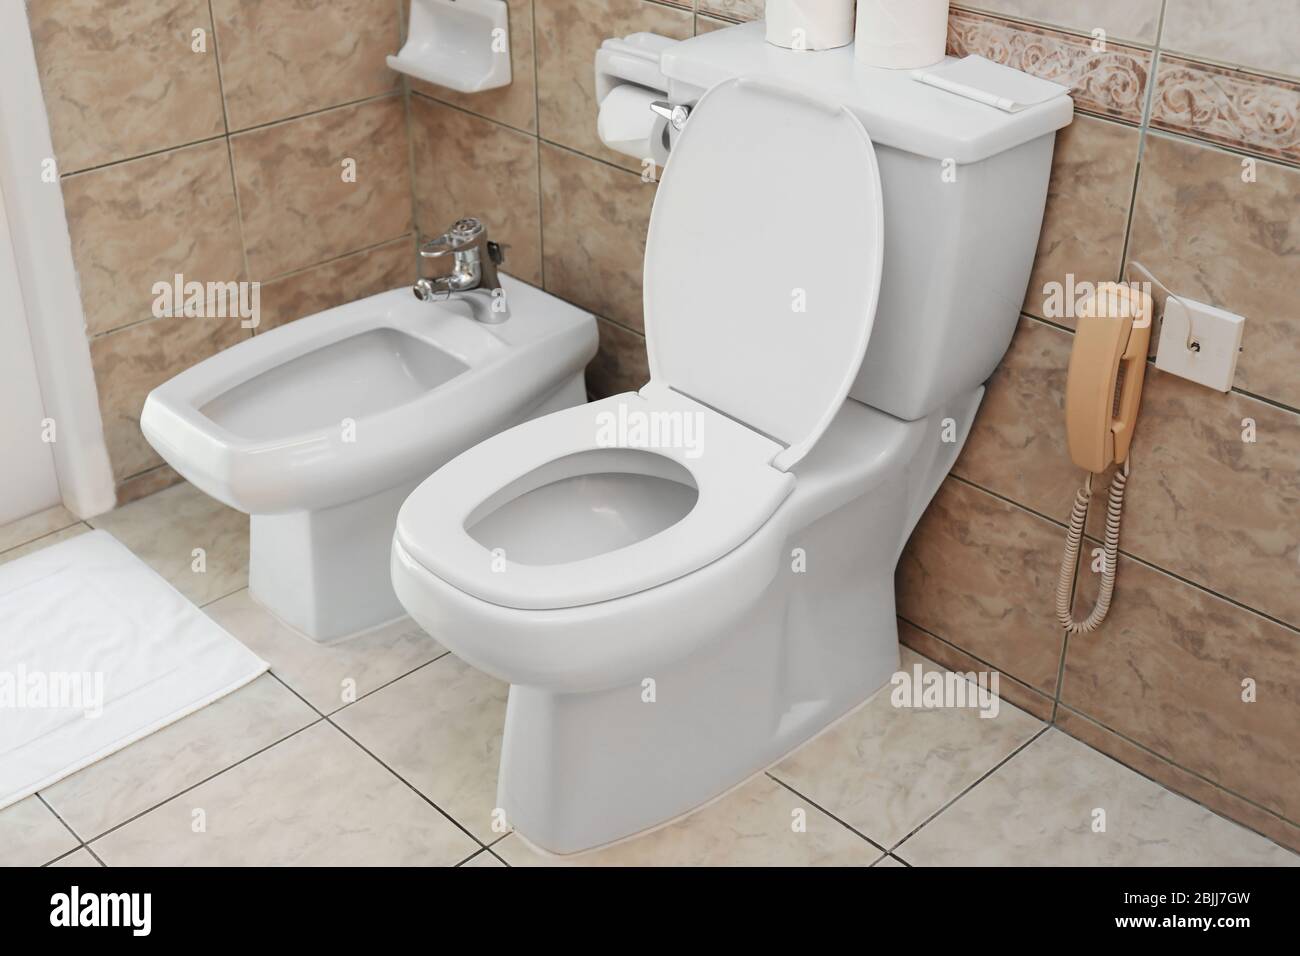 Toilet bowl and bidet in light modern bathroom Stock Photo - Alamy